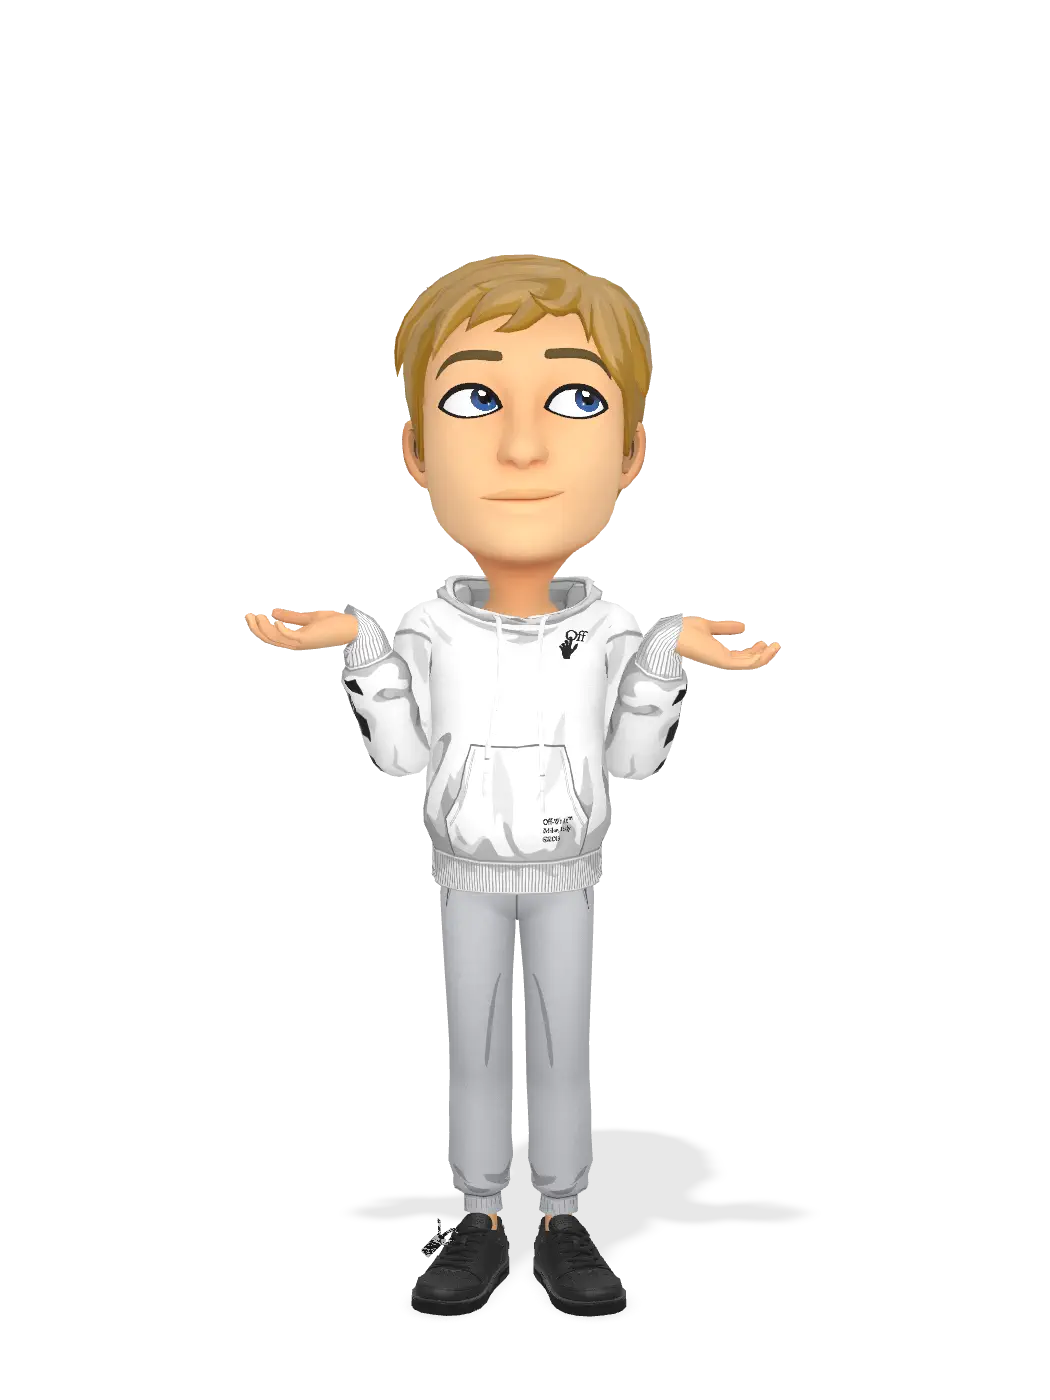 3D Bitmoji for mikkeluostarine avatar